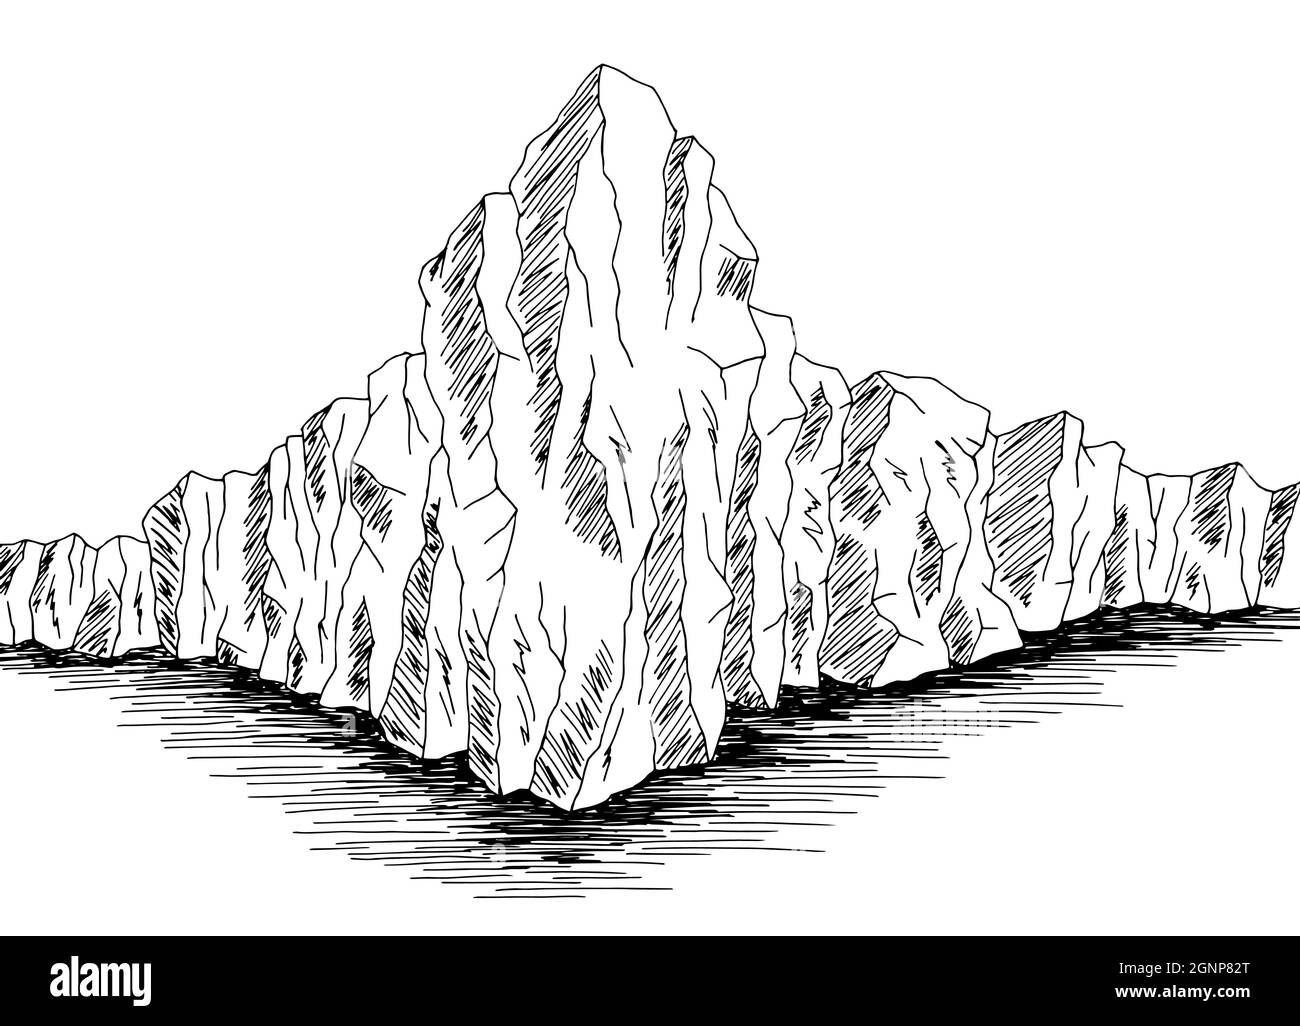 Cliff Meer Küste Grafik schwarz weiß Landschaft Skizze Illustration Vektor Stock Vektor